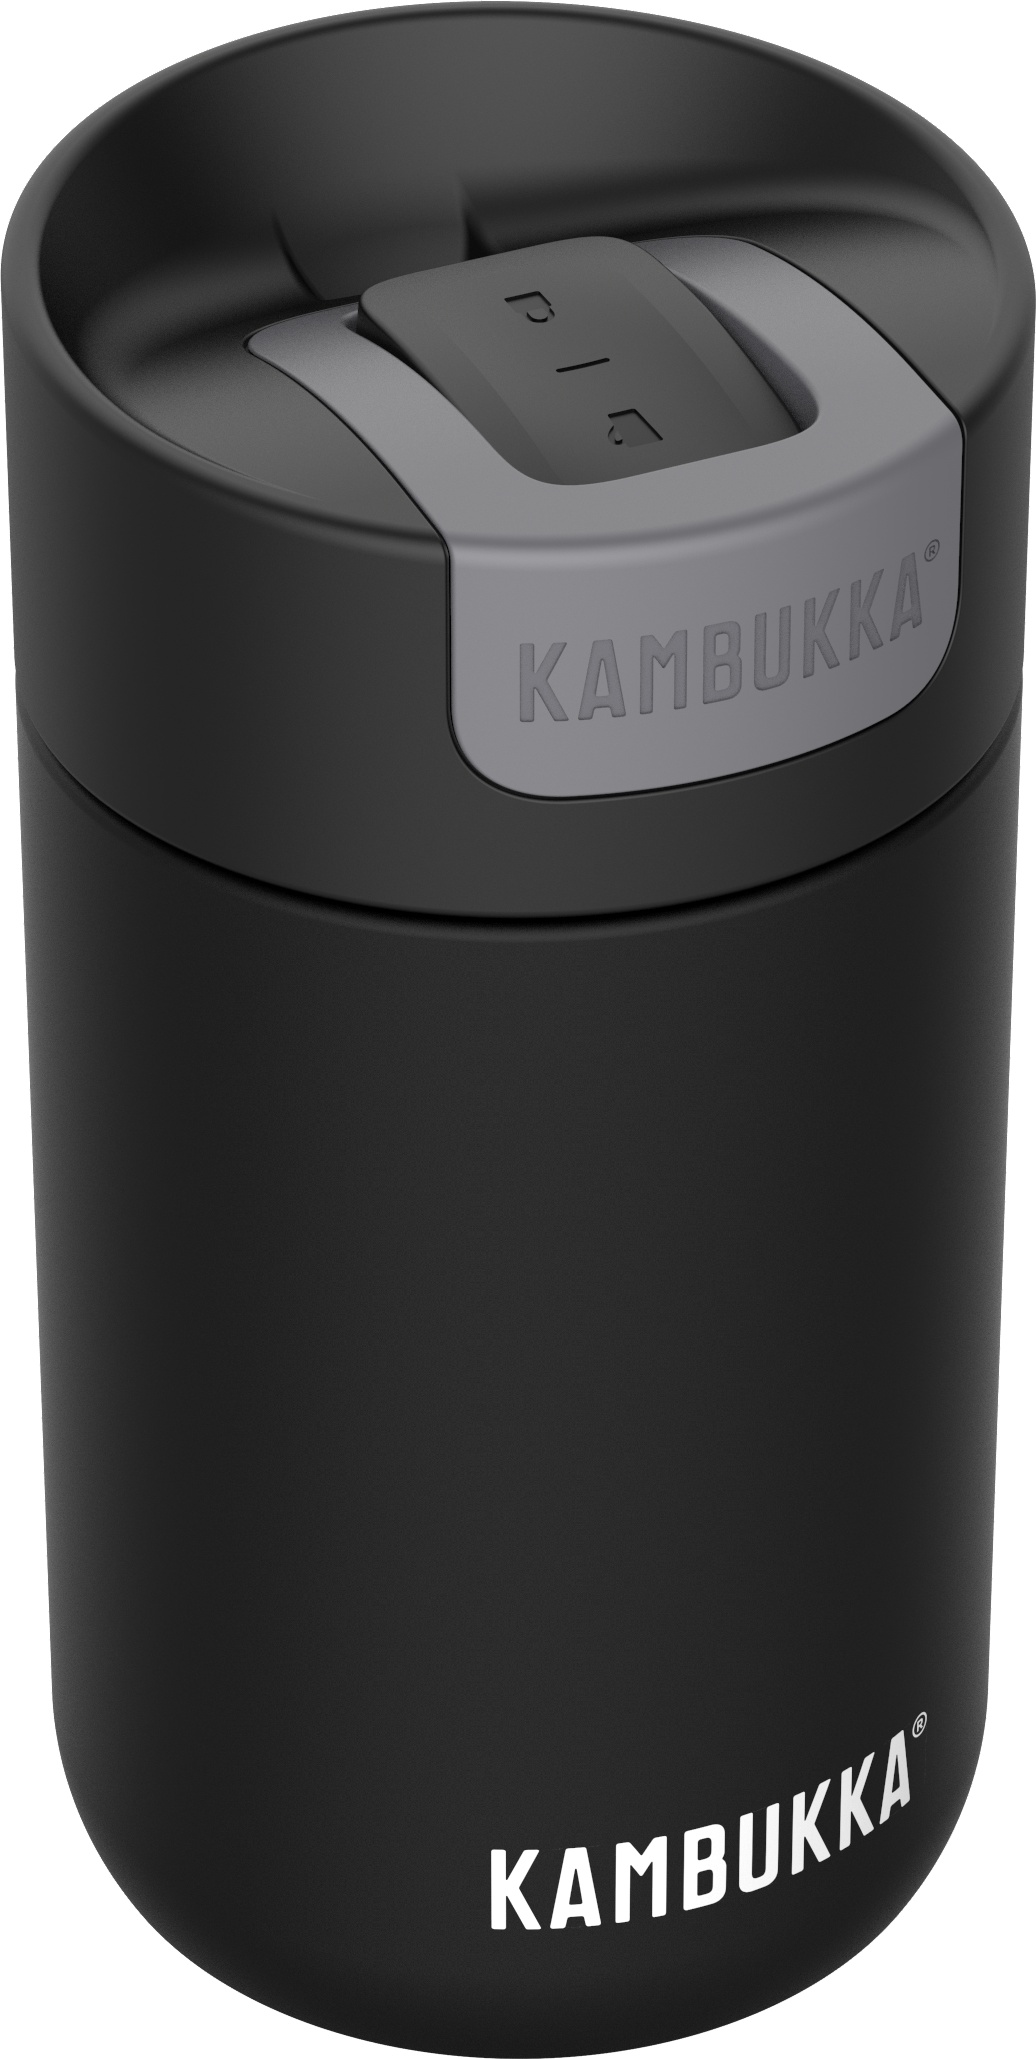 Cana termos Kambukka Olympus cu capac Switch inox 300ml Jet Black Kambukka pret redus imagine 2022